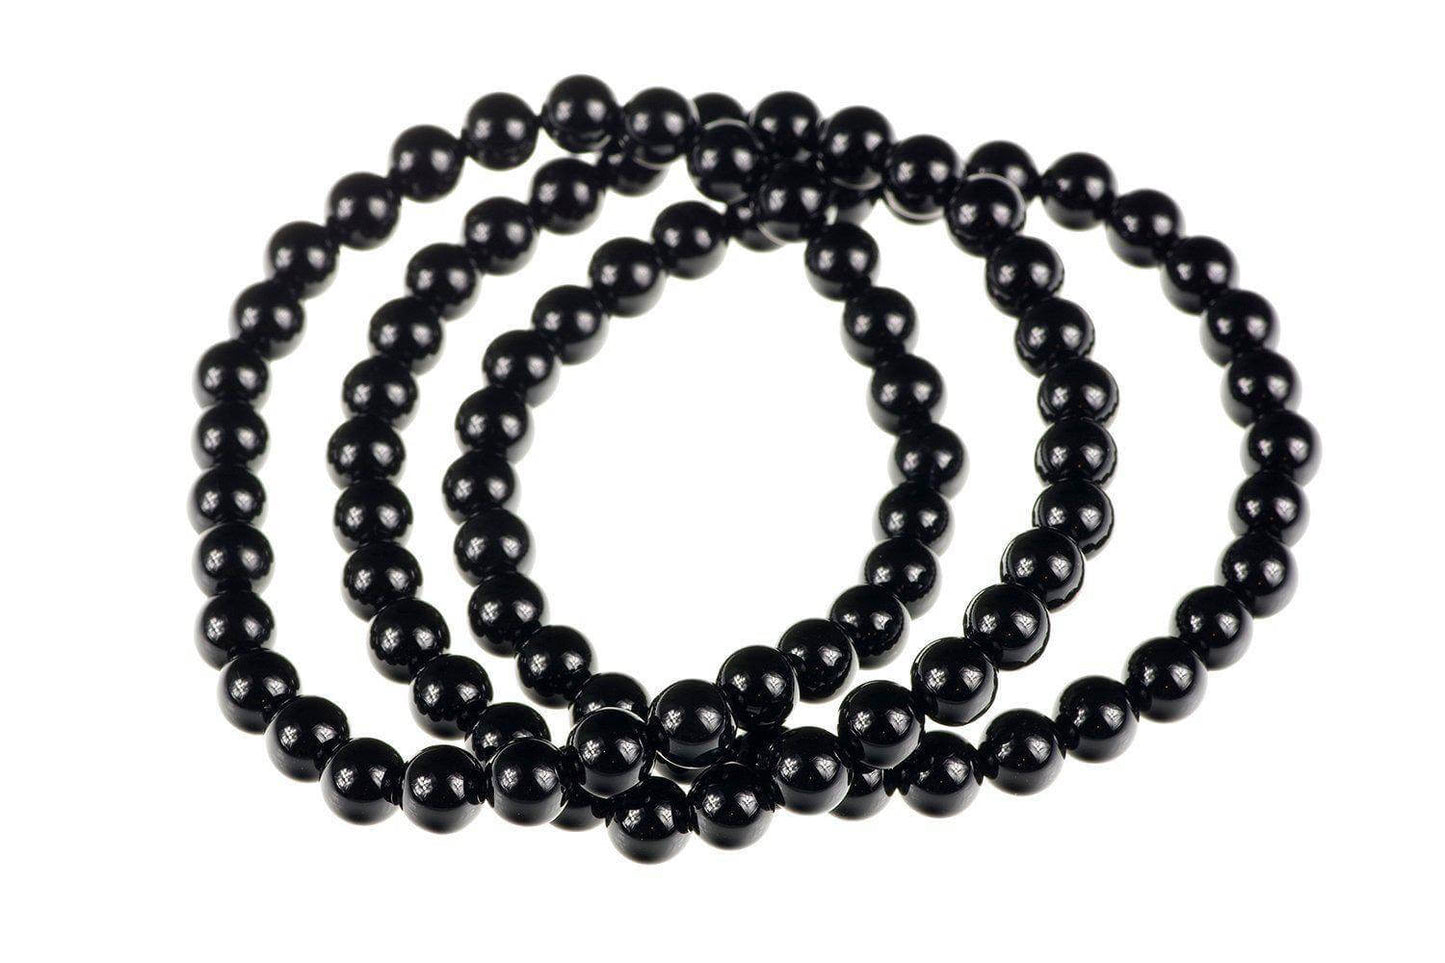 Black onyx bracelet – 6mm